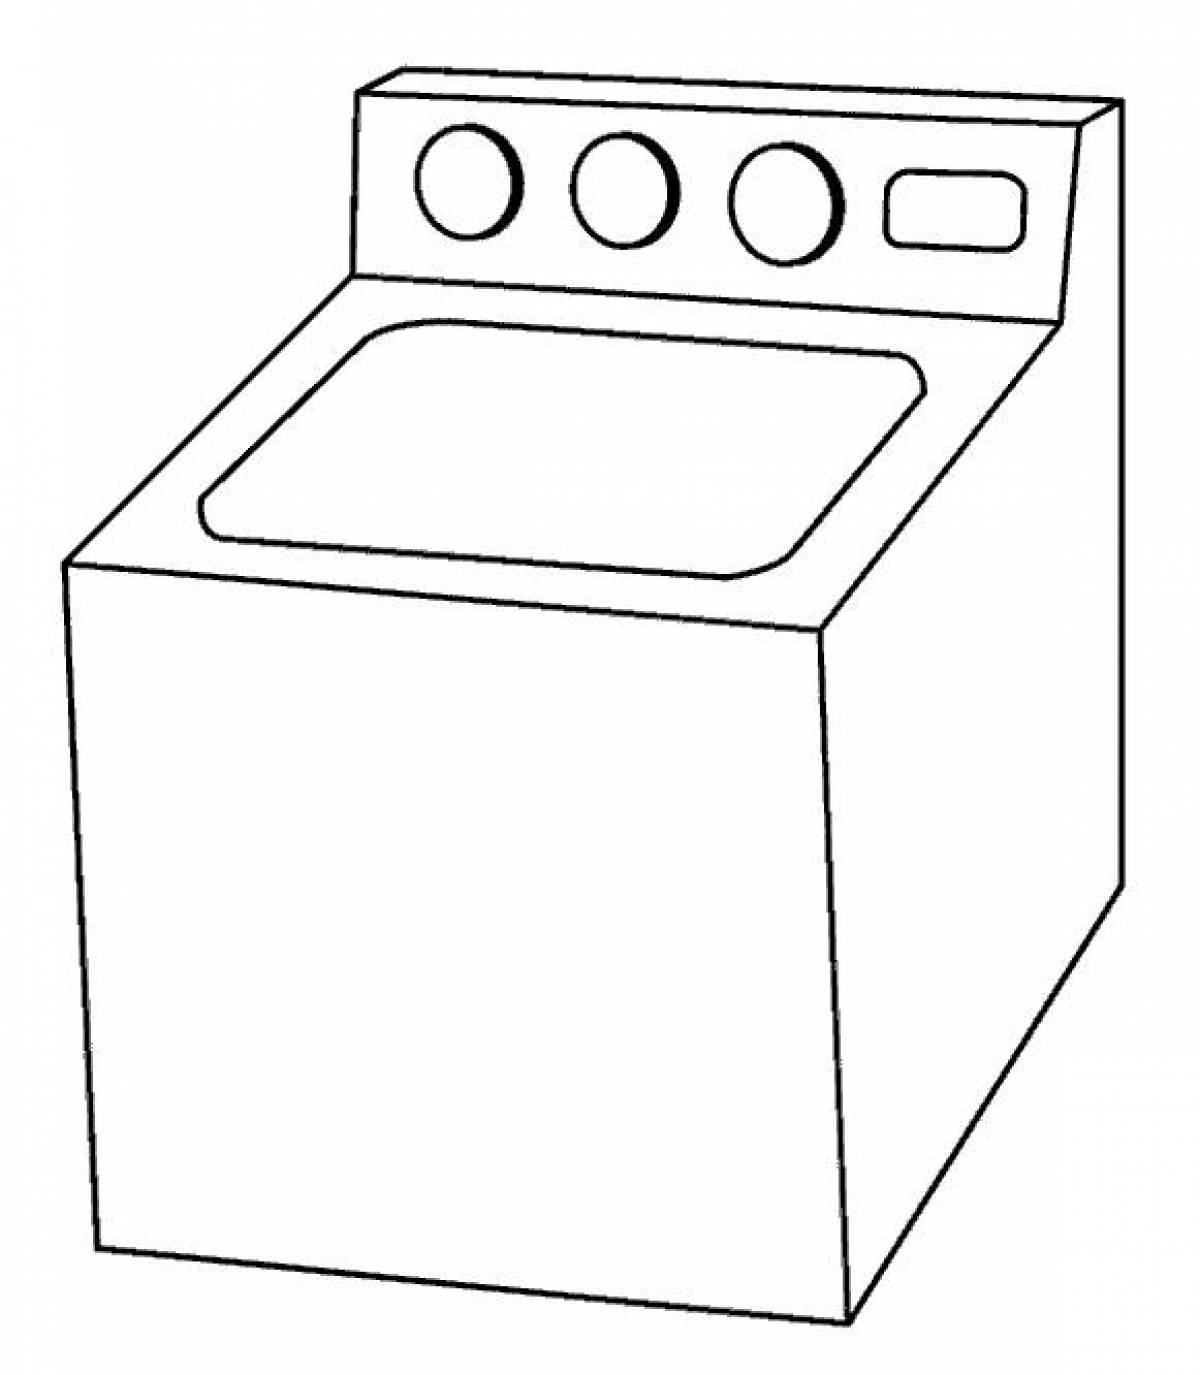 Coloring mystical washing machine